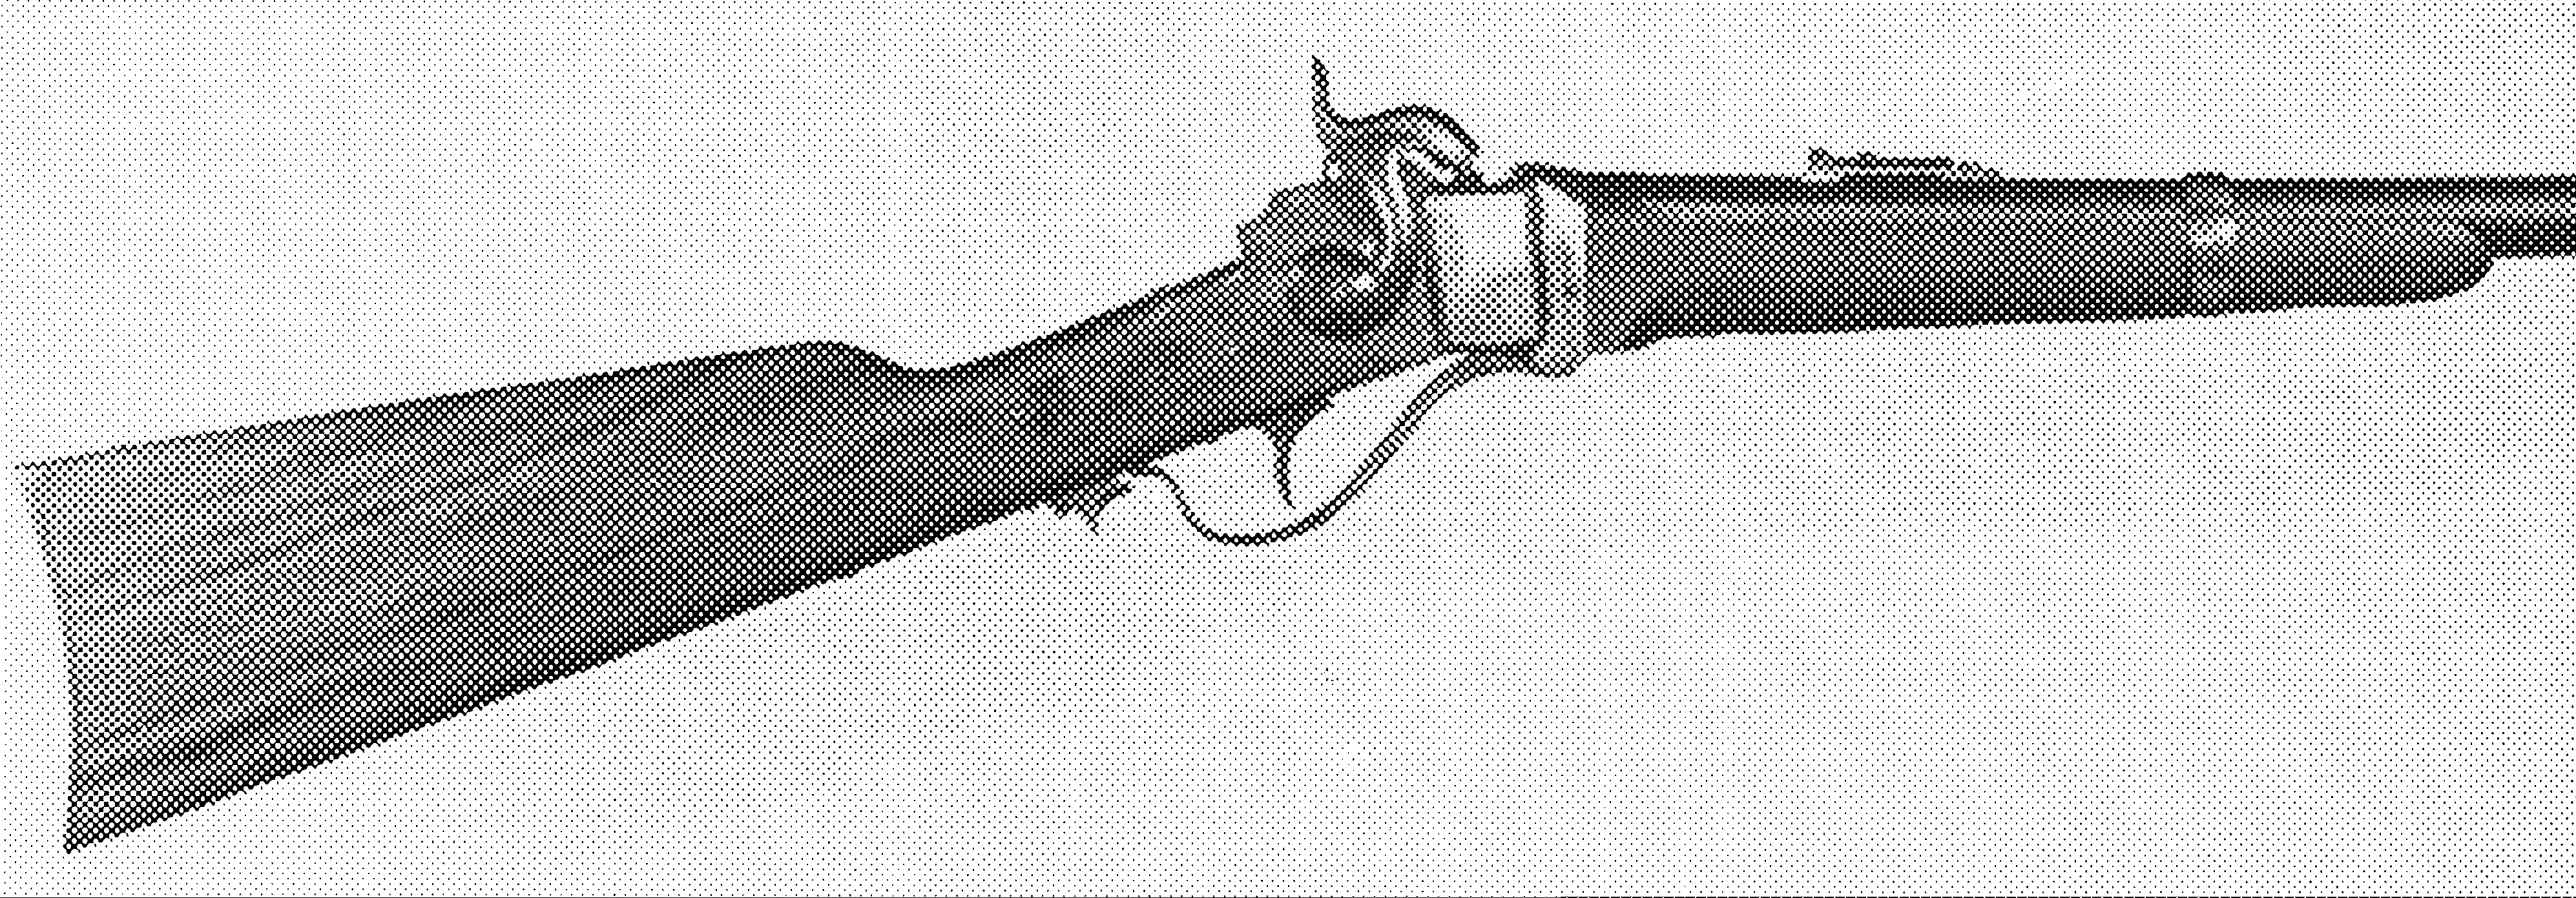 Model 1863 Military Carbine